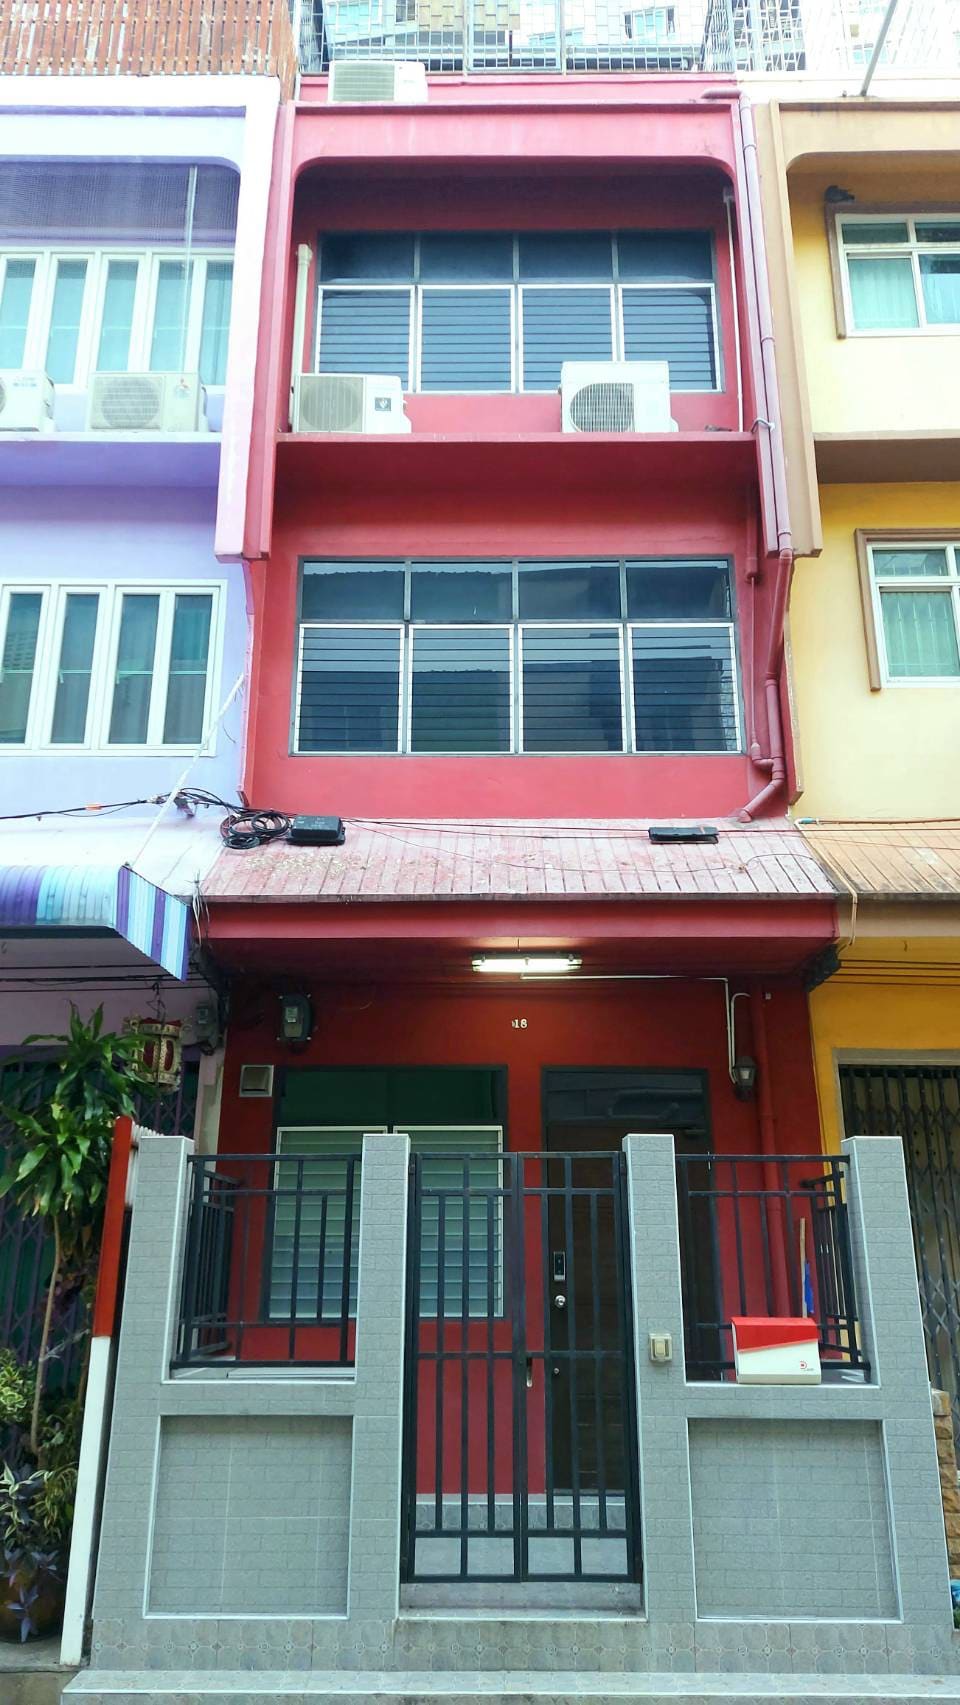 2 Bedroom 4 Beds Red Terrace House, BTS/MRT Bangwa